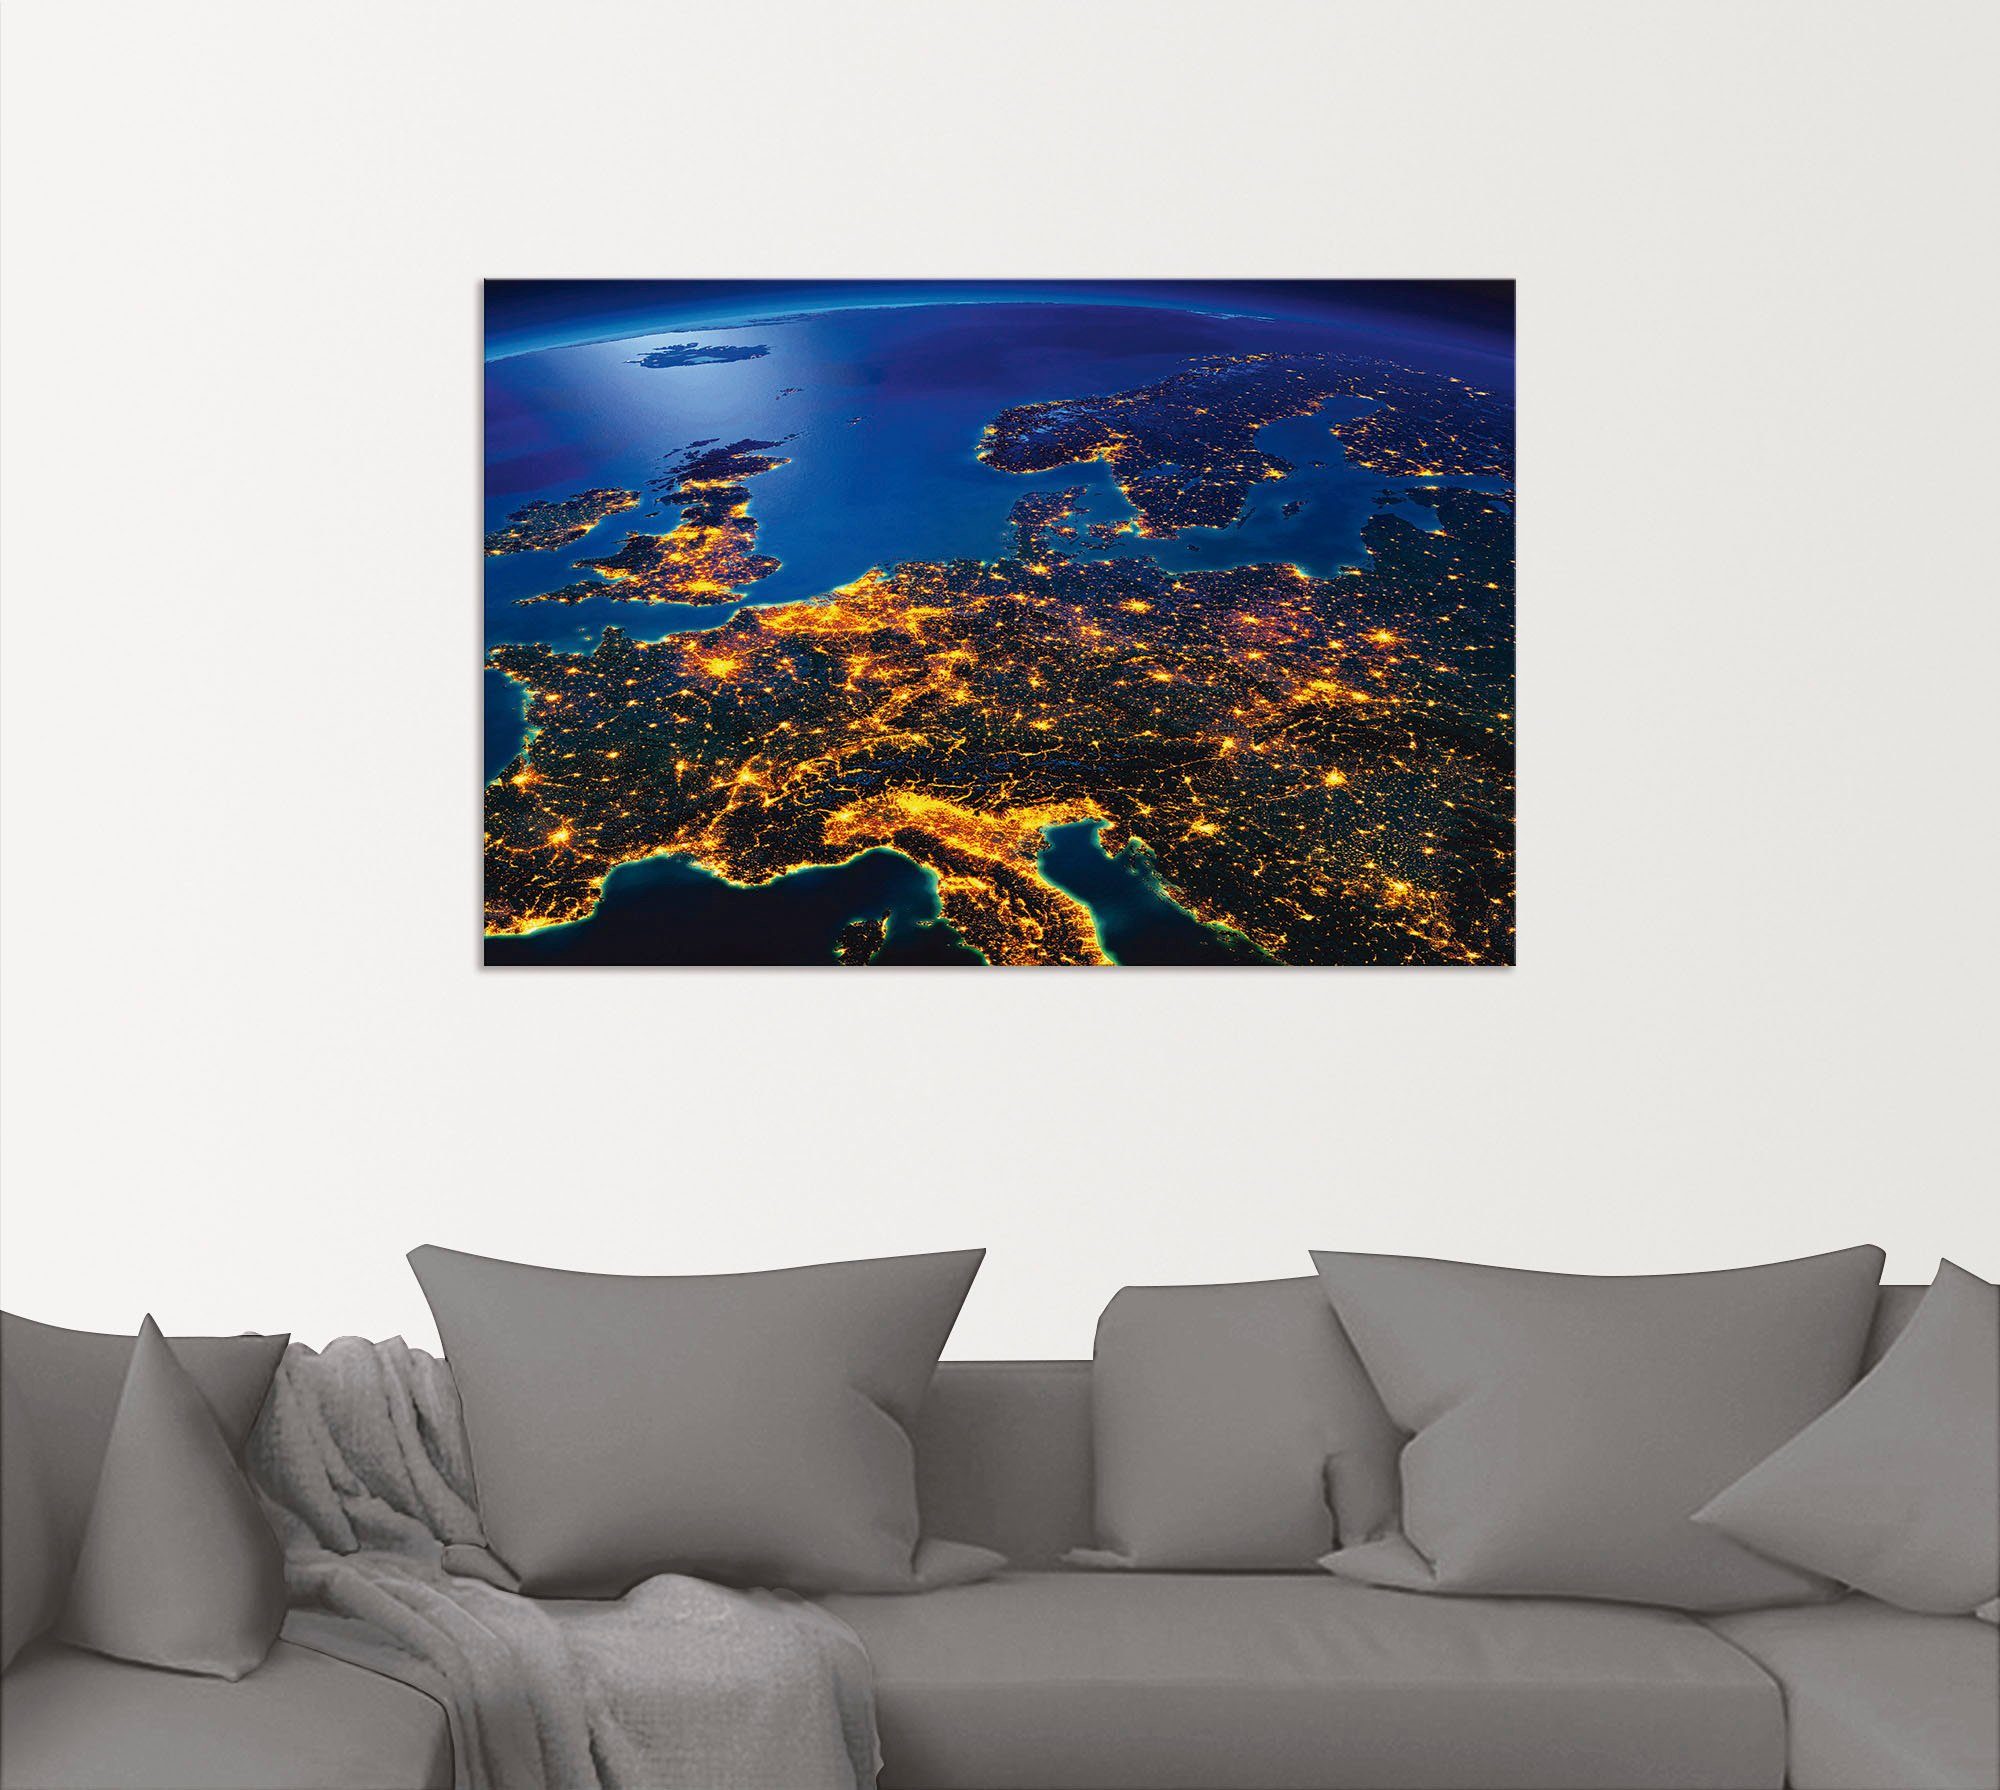 Artland Wandbild Zentral Europa vom Leinwandbild, & Weltall (1 Wandaufkleber Weltraum, versch. in oder Alubild, als Kosmos Poster Größen St)